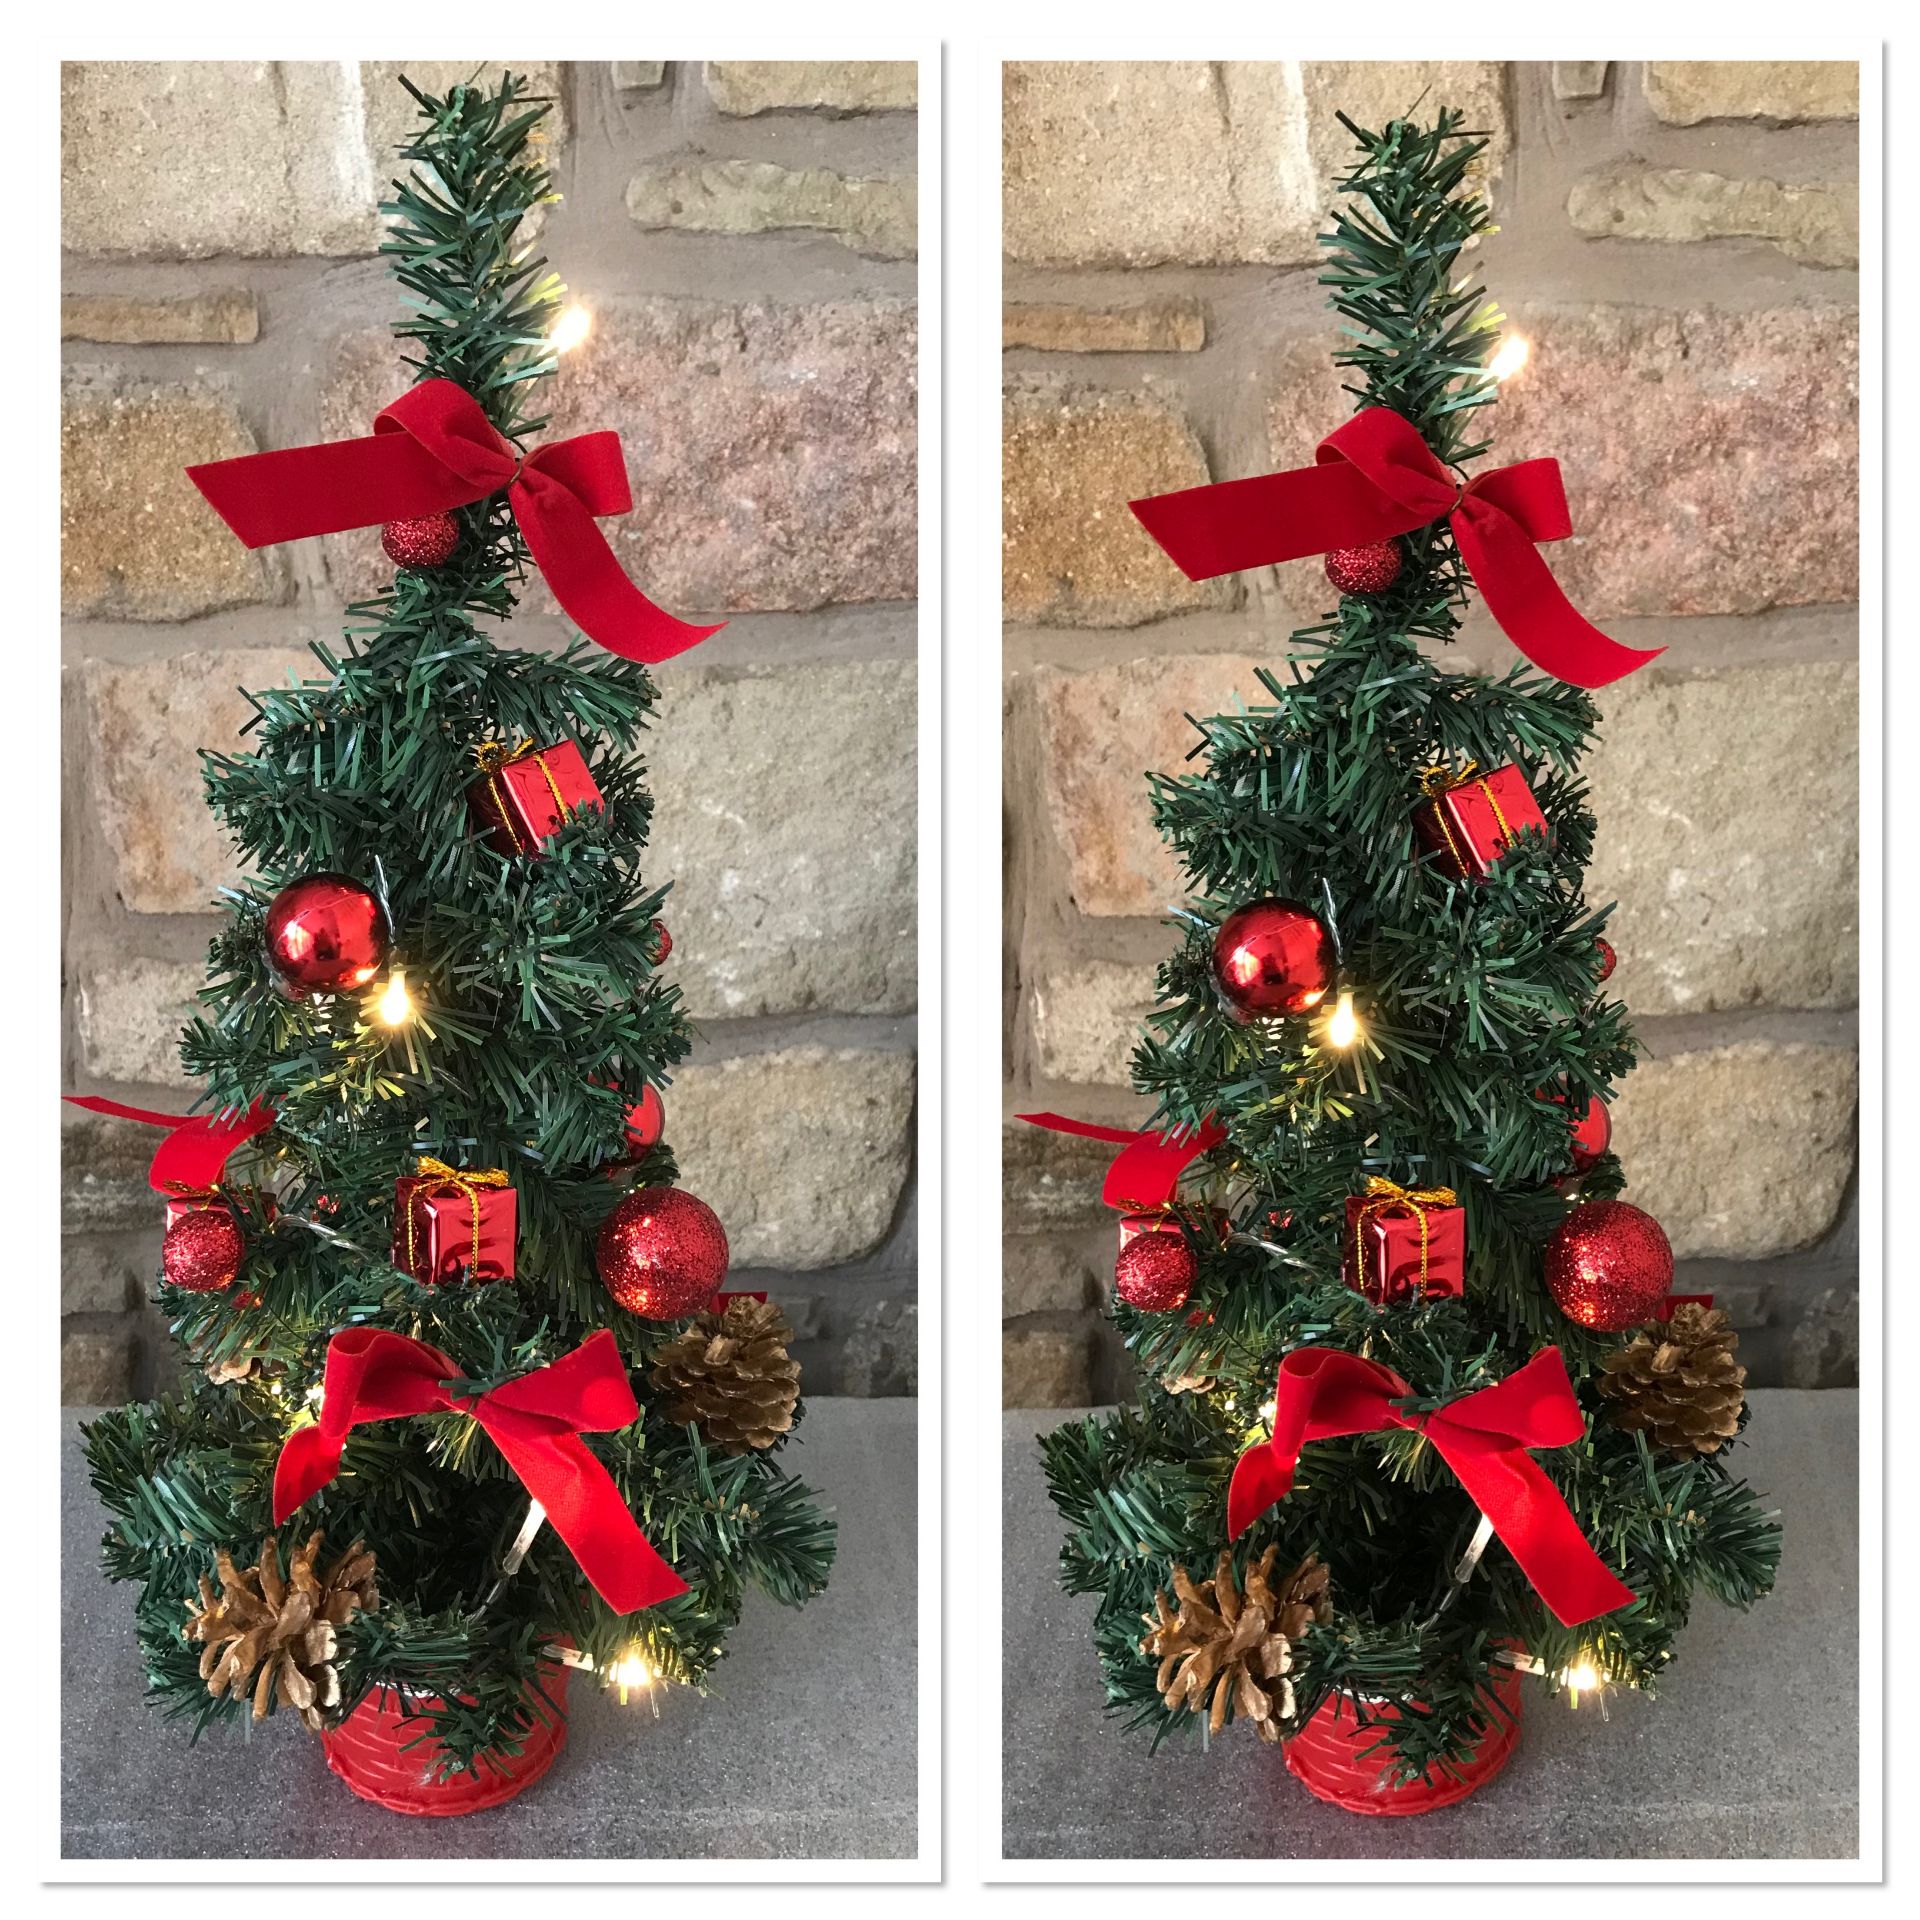 6 x Mini Christmas Trees Decorated